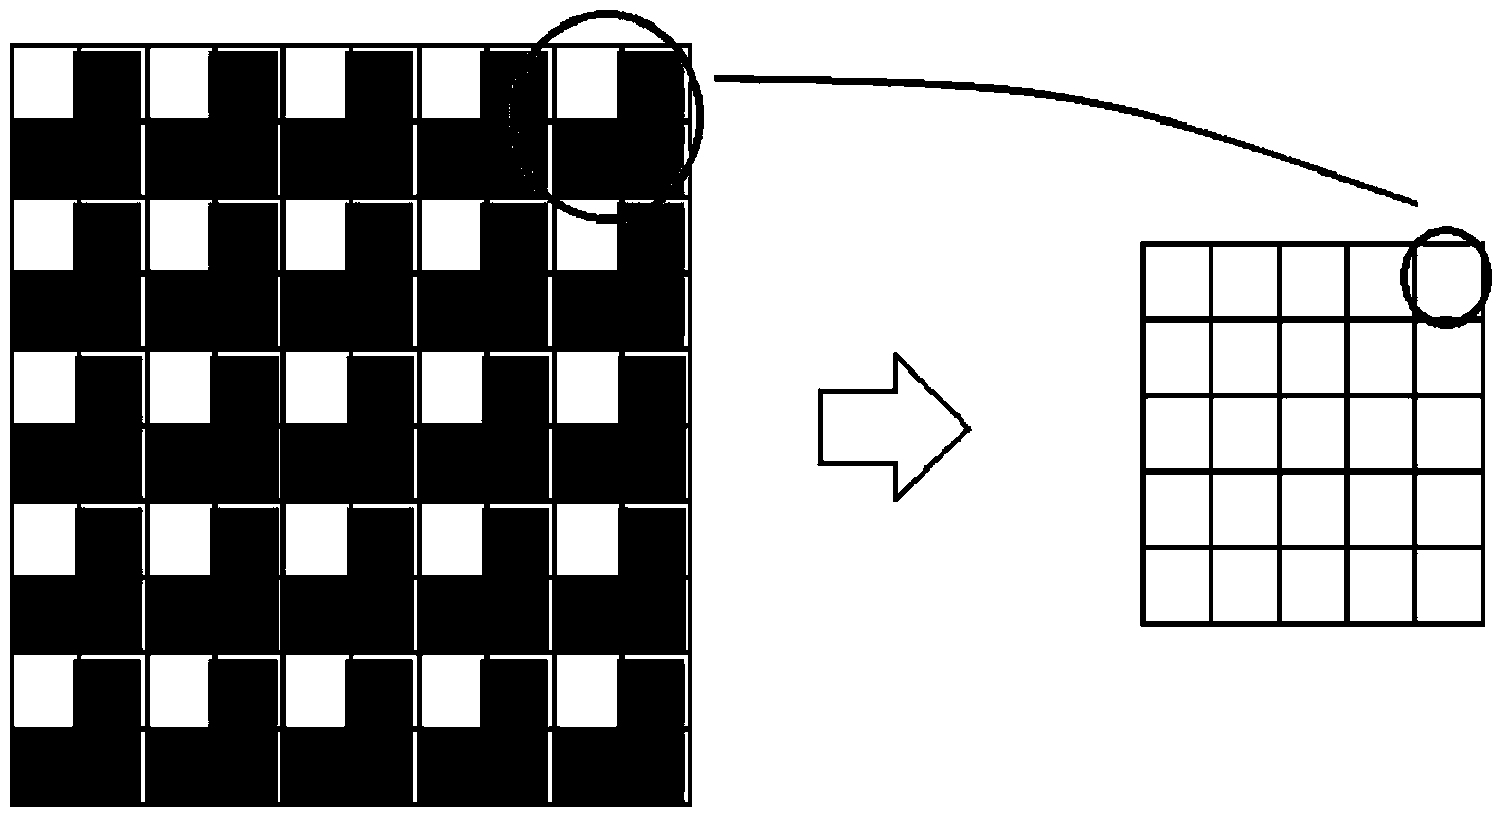 Numeric field L-type pixel binning method